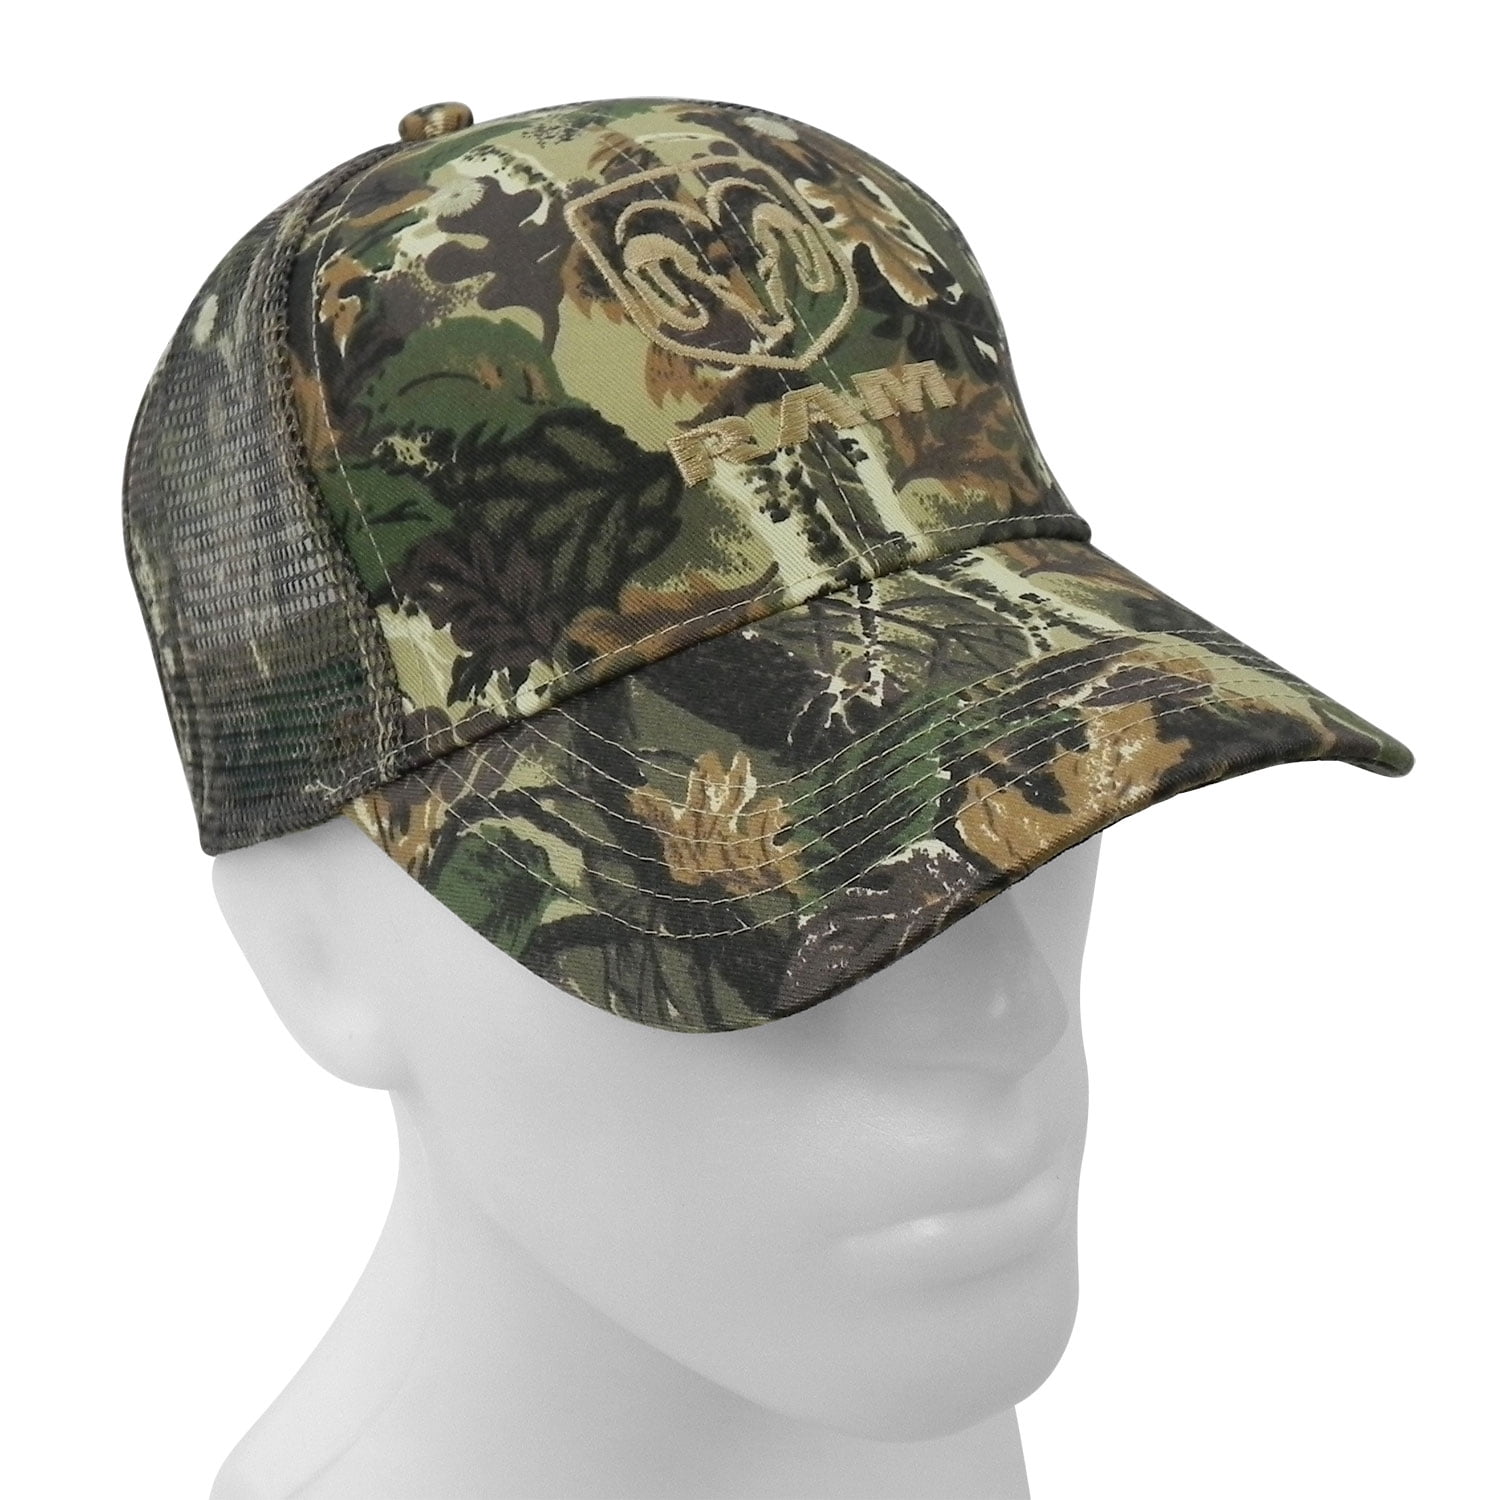 Dodge Hemi Grab Life By The Horns Camouflage Meshback Adjustable Cap Hat 